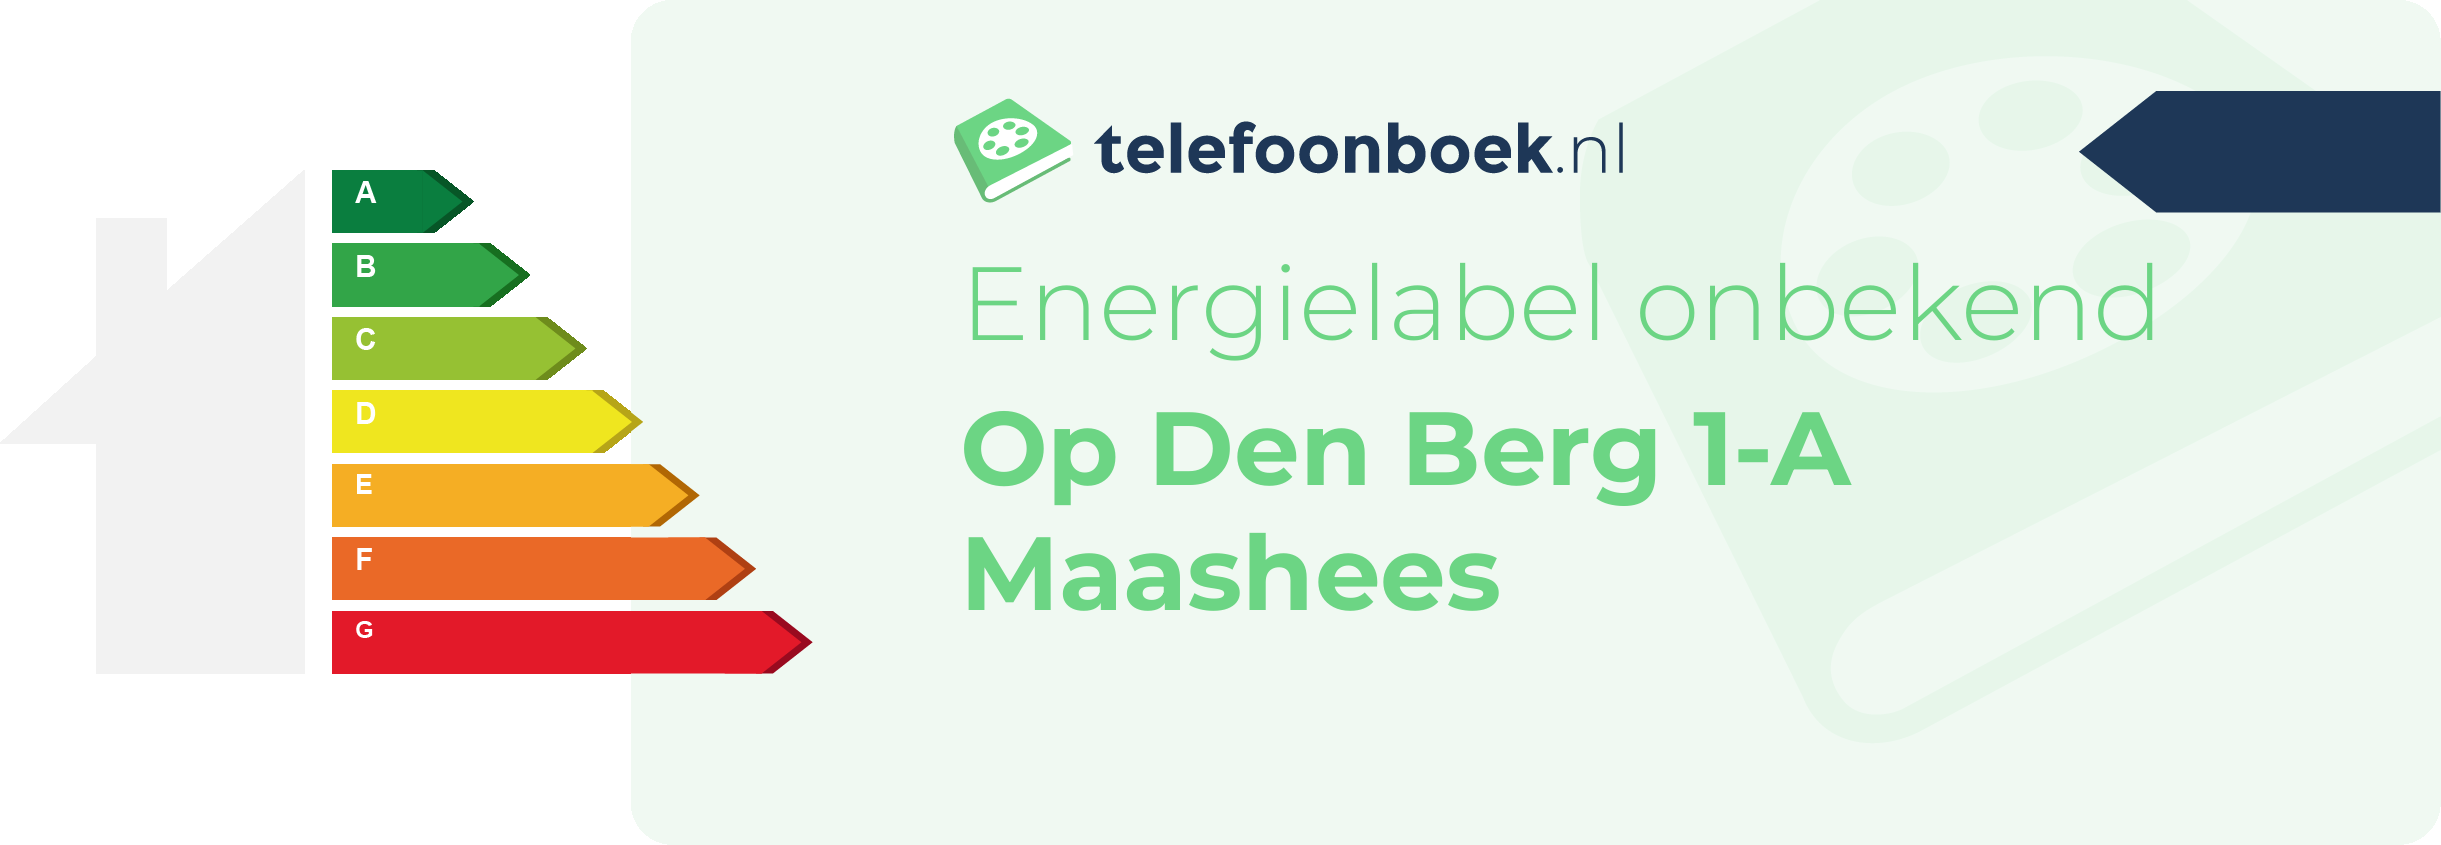 Energielabel Op Den Berg 1-A Maashees